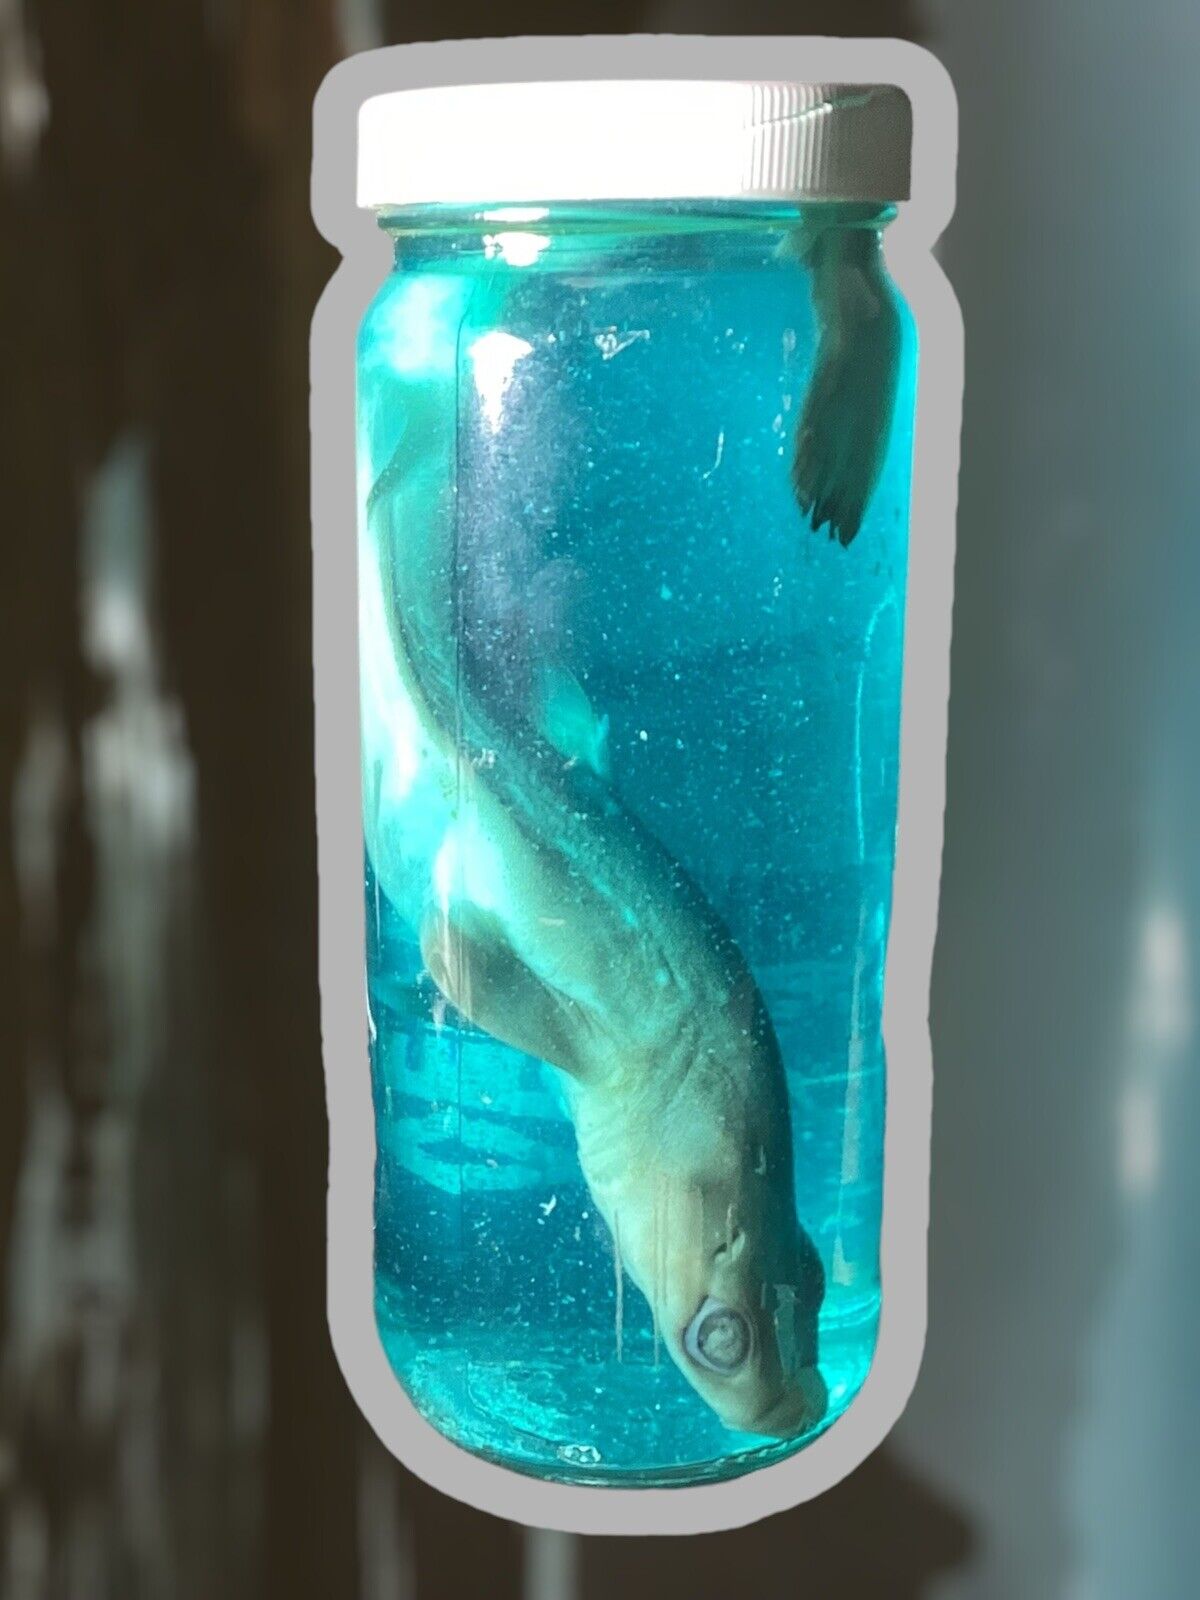 Oddity Baby Shark Preserved In Glass Jar Wet Specimen Weird Convo Starter Cool